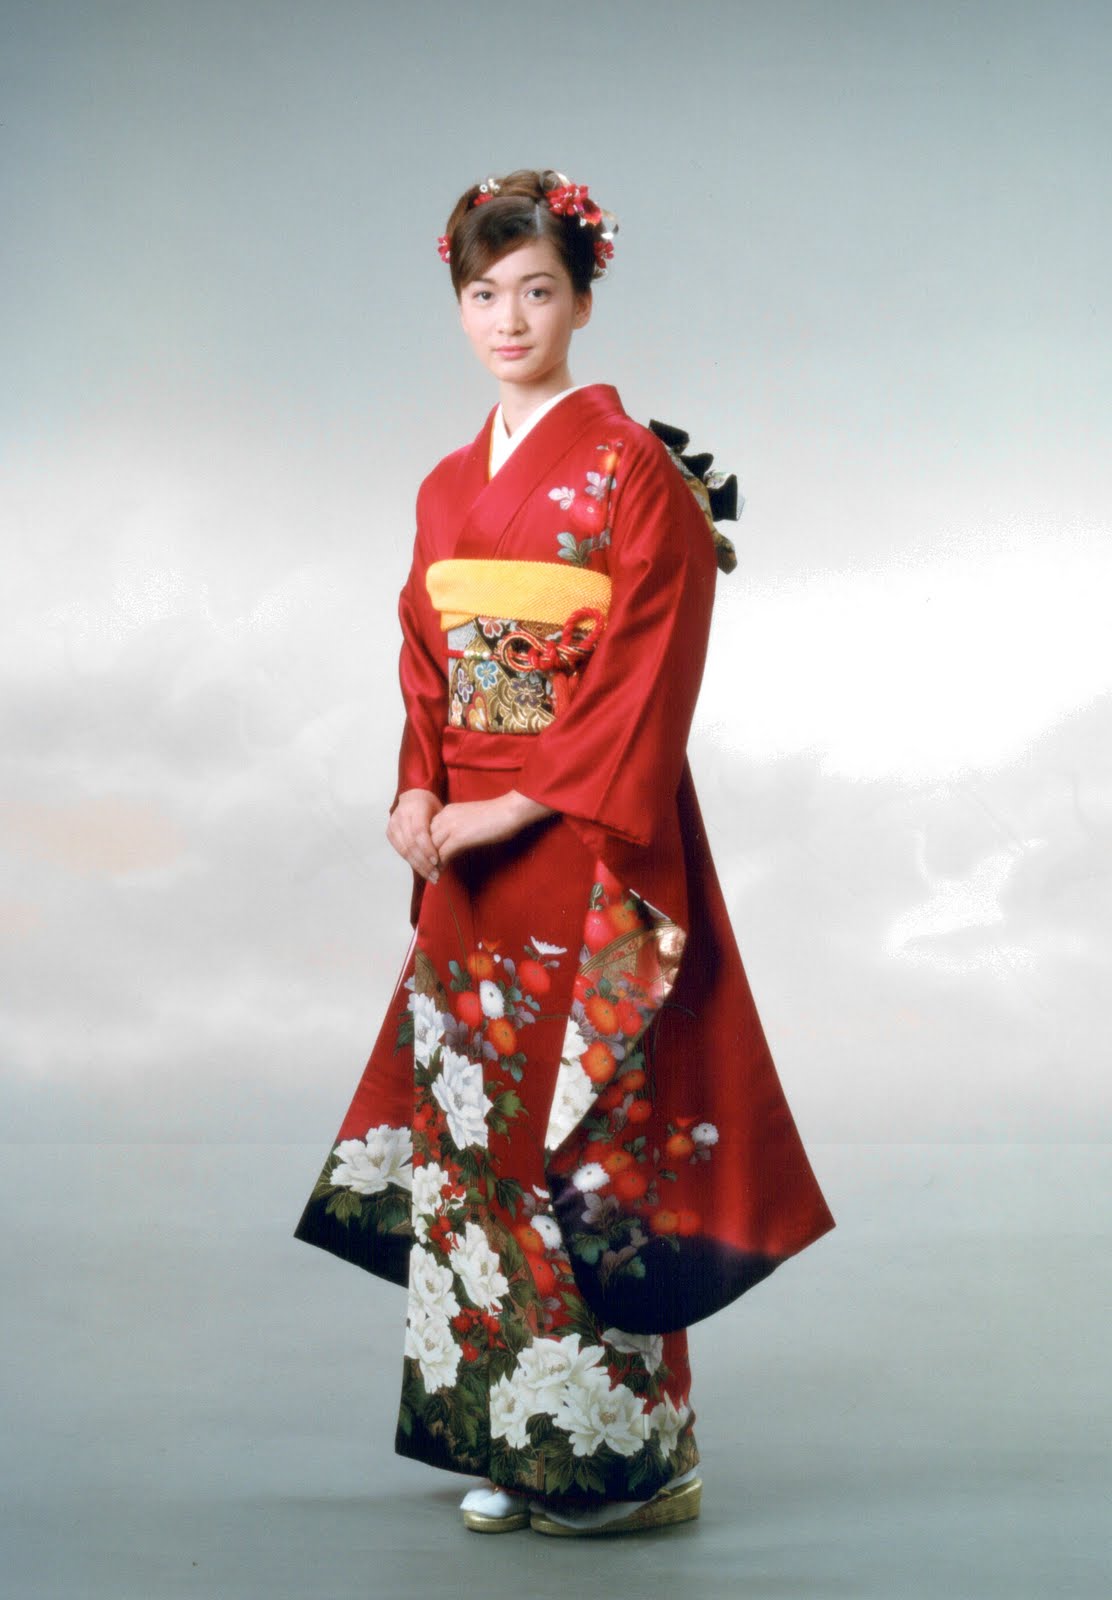 trang-ph-c-truy-n-th-ng-nh-t-b-n-kimono